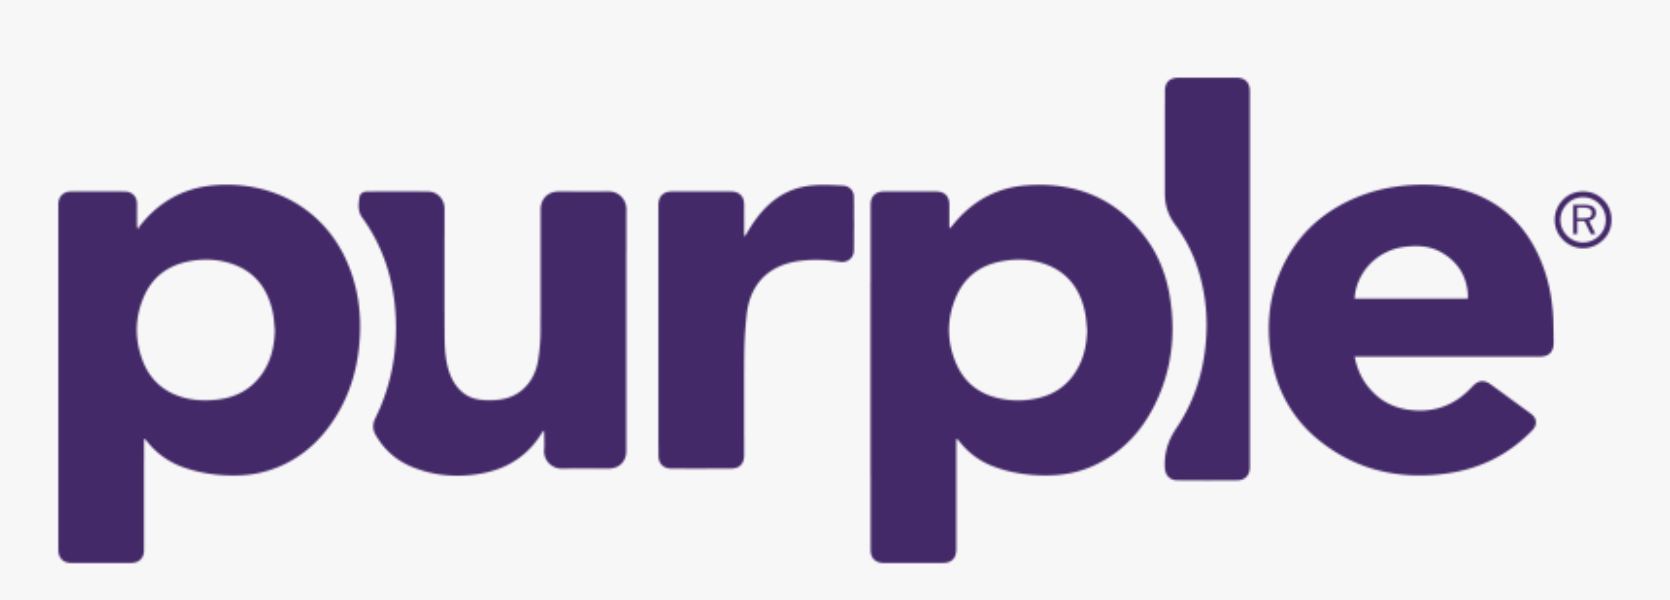 23-236108_purple-logo-logo-purple-mattress-hd-png-download